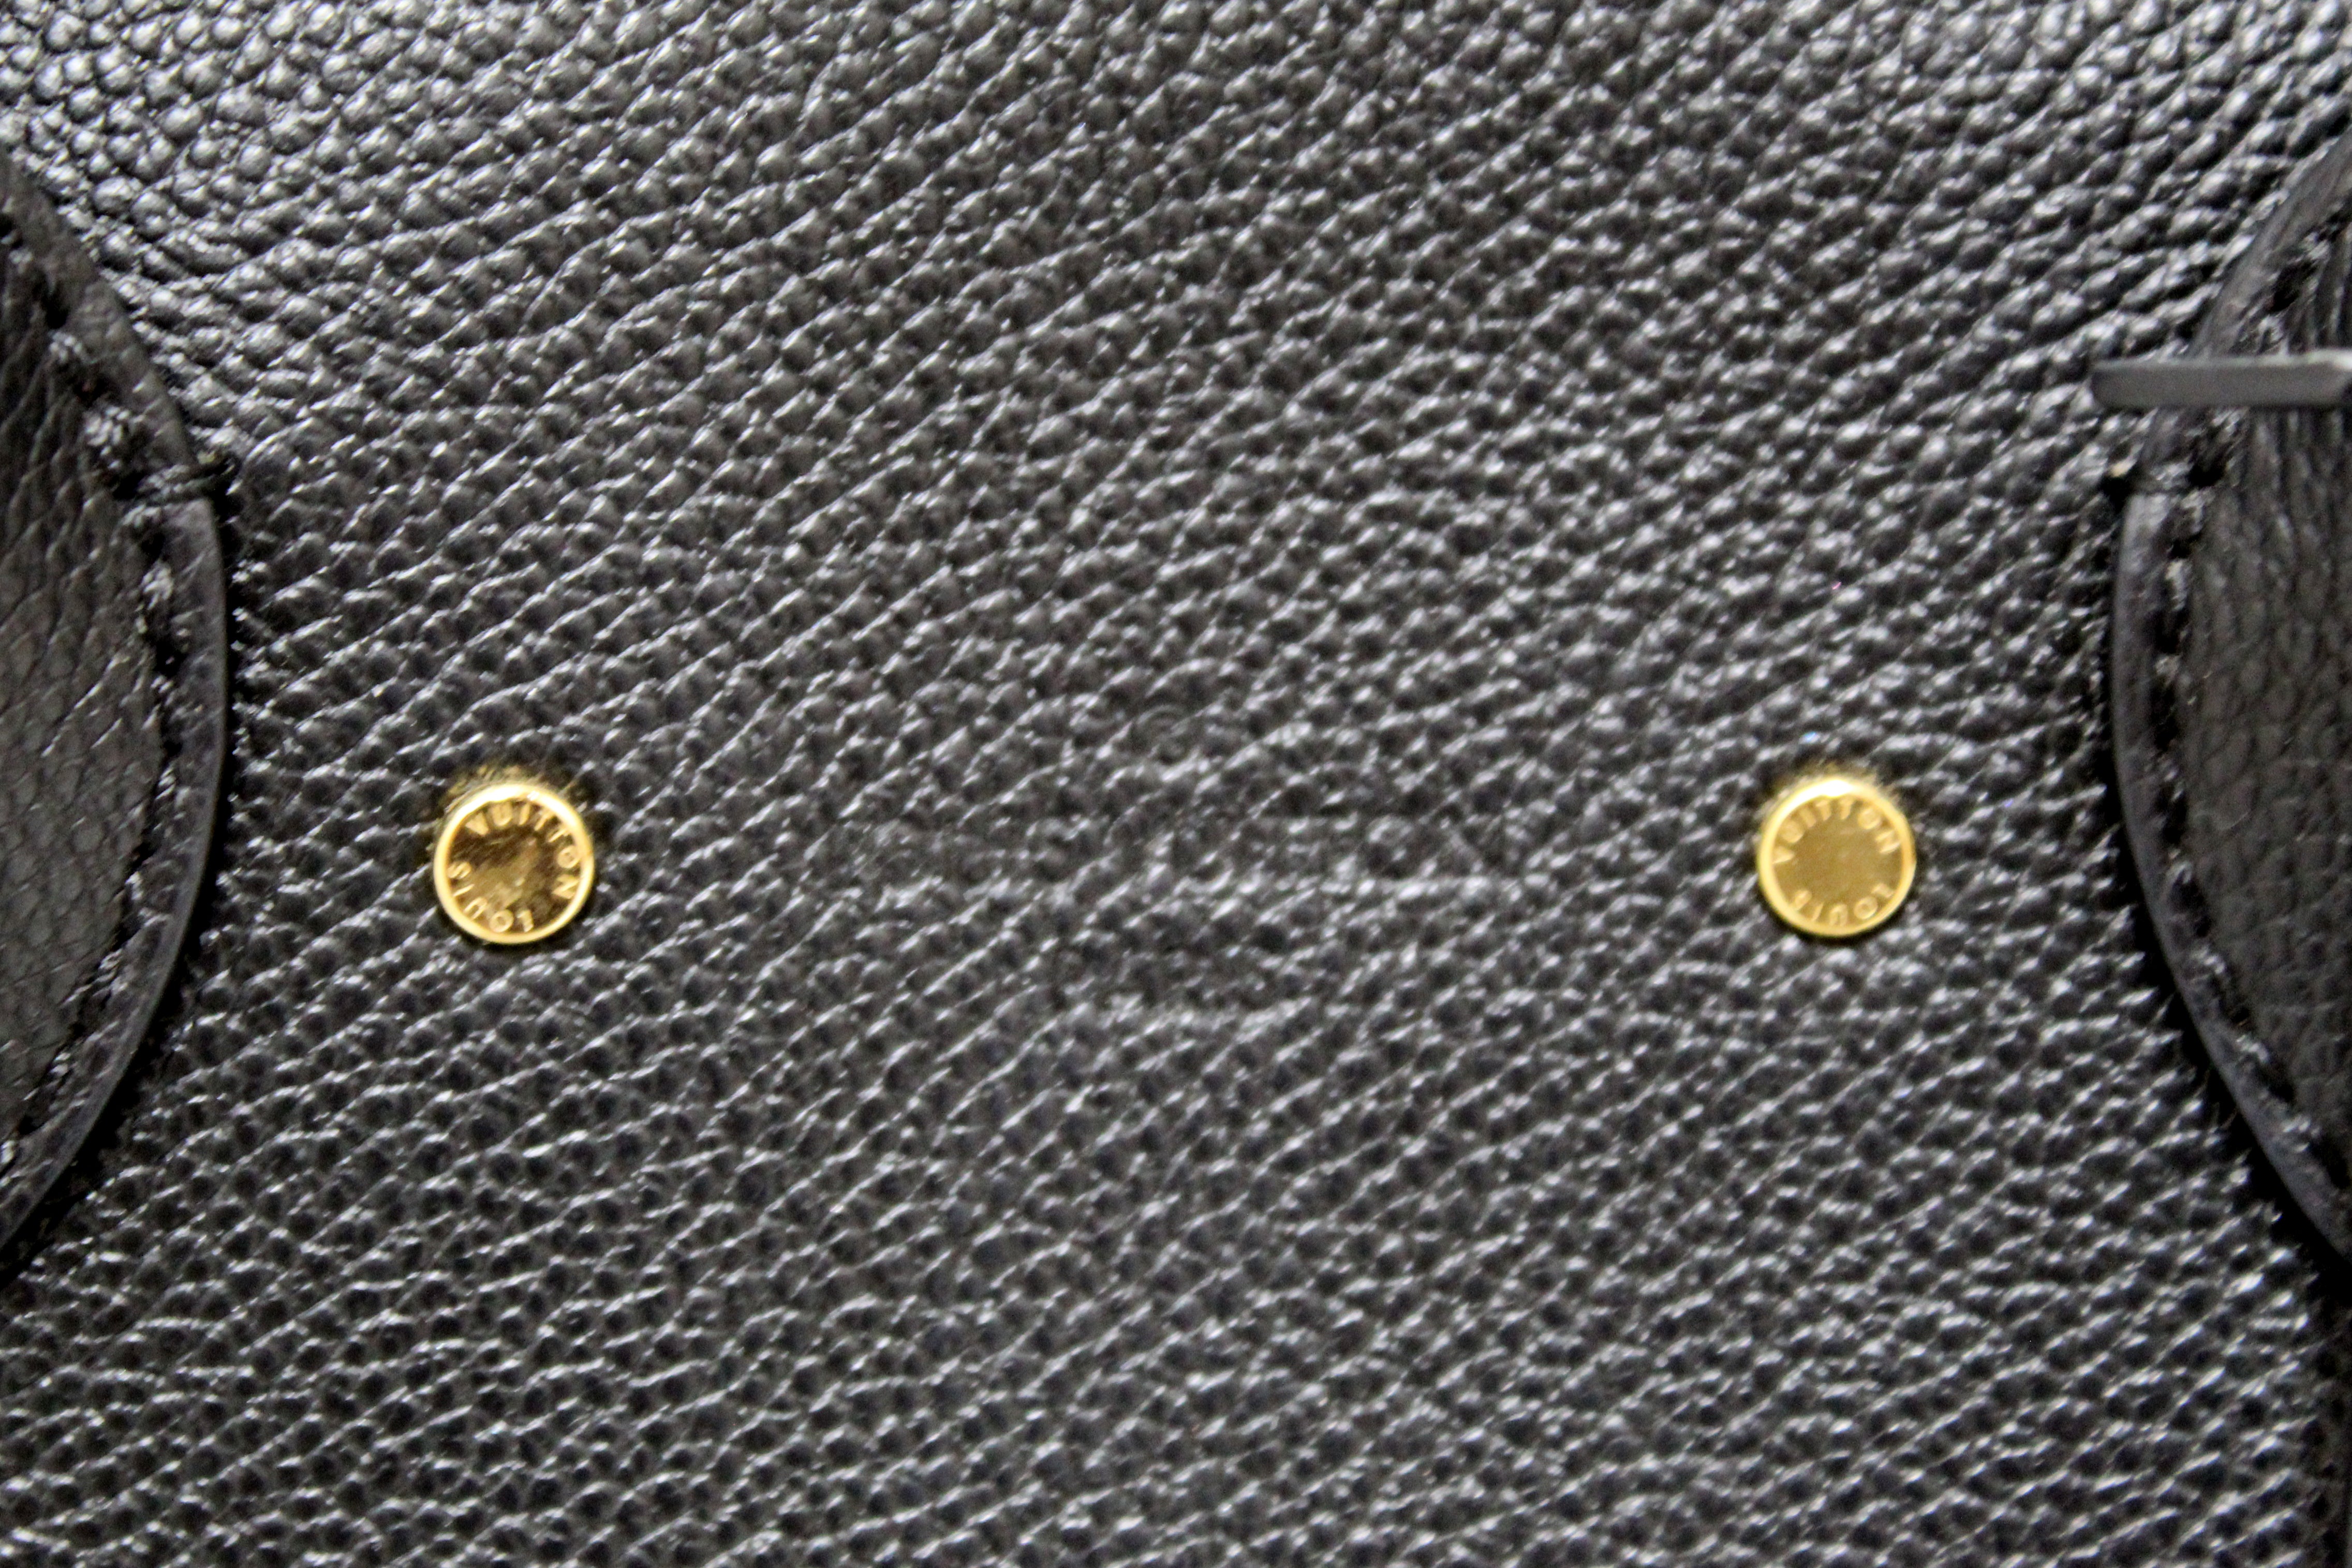 Authentic Louis Vuitton Black Monogram Empreinte Leather Pont Neuf GM Bag